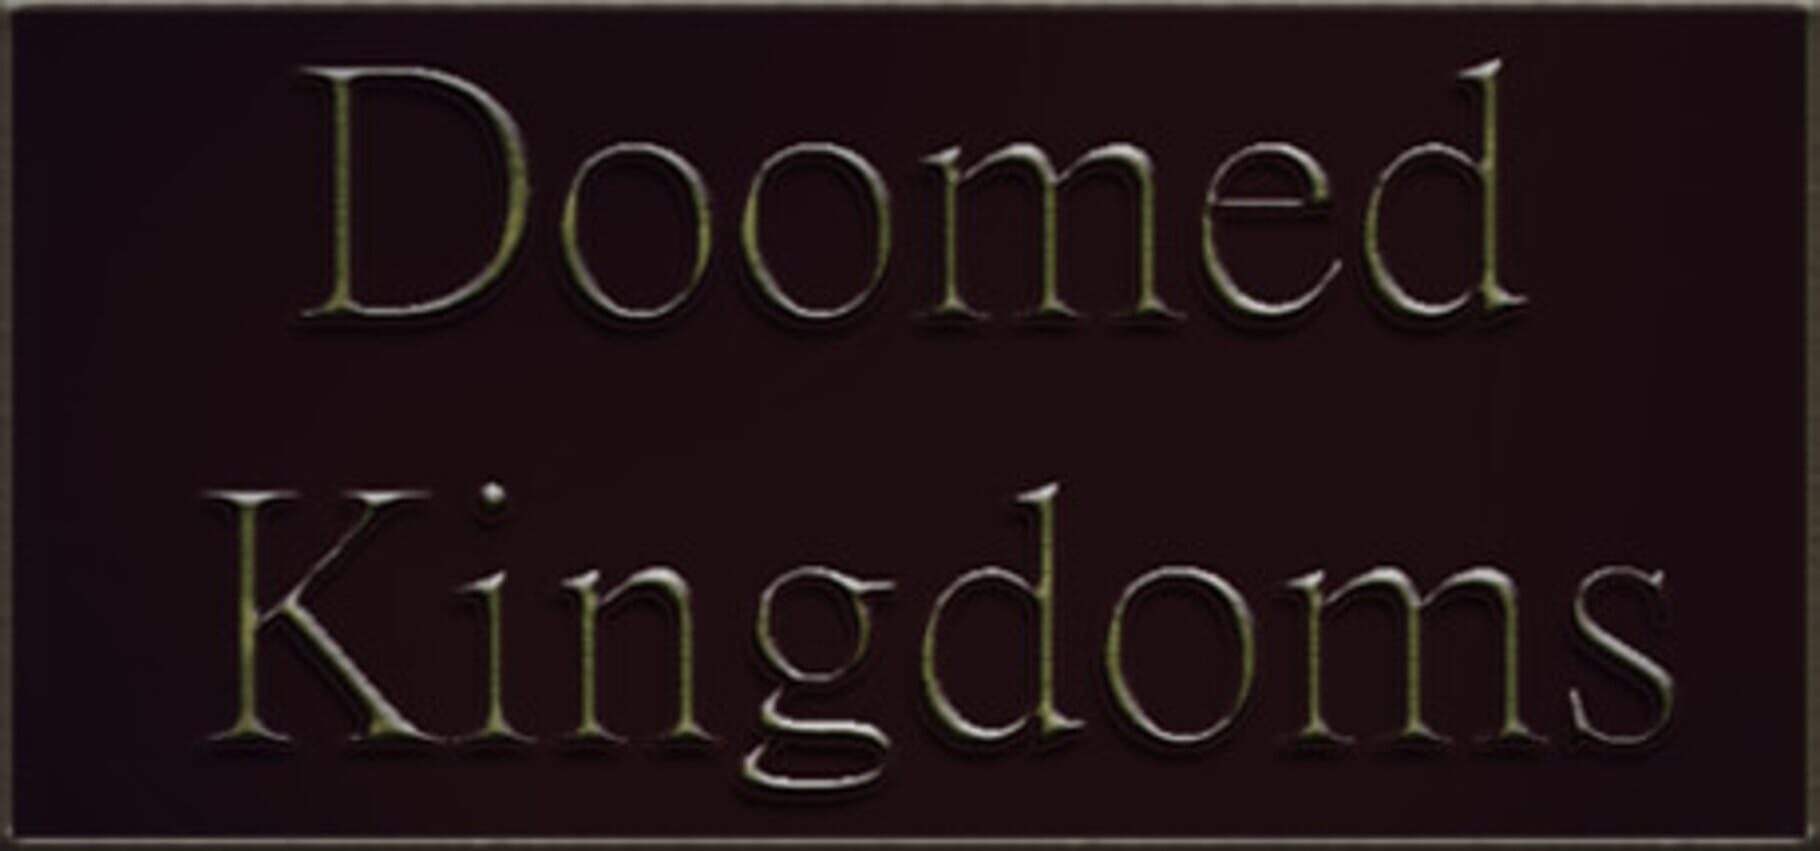 Doomed kingdoms steam